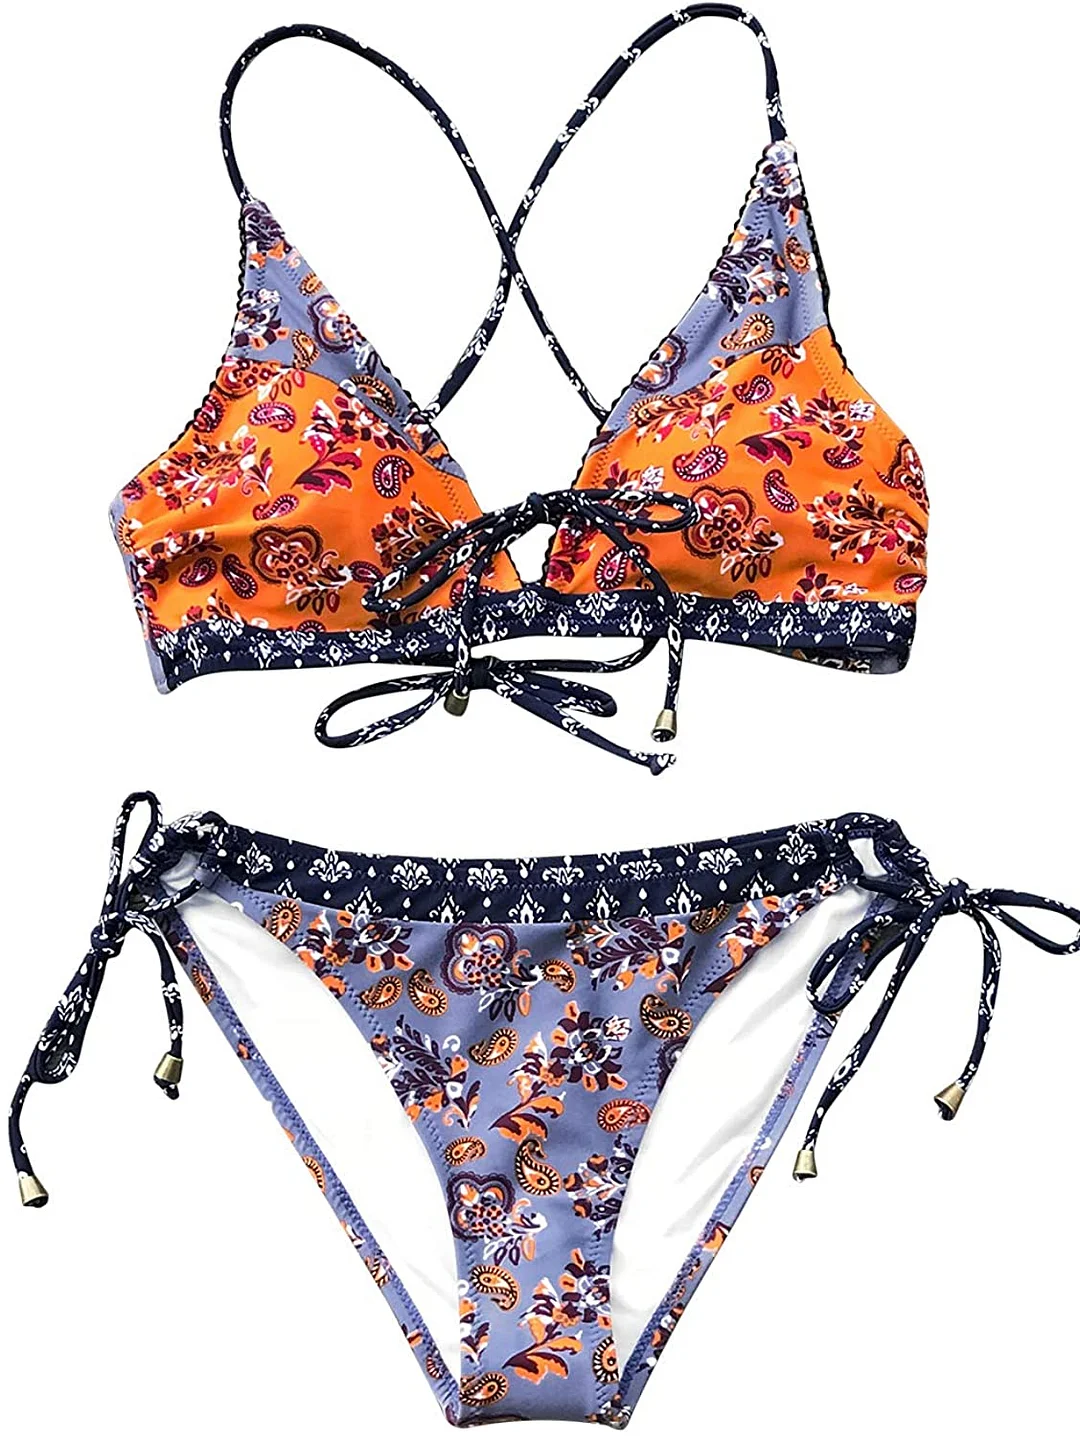 Women’s Paisley Print Bikini Set Back Crisscross Lined Swimsuit (XX-Large Multicolored)